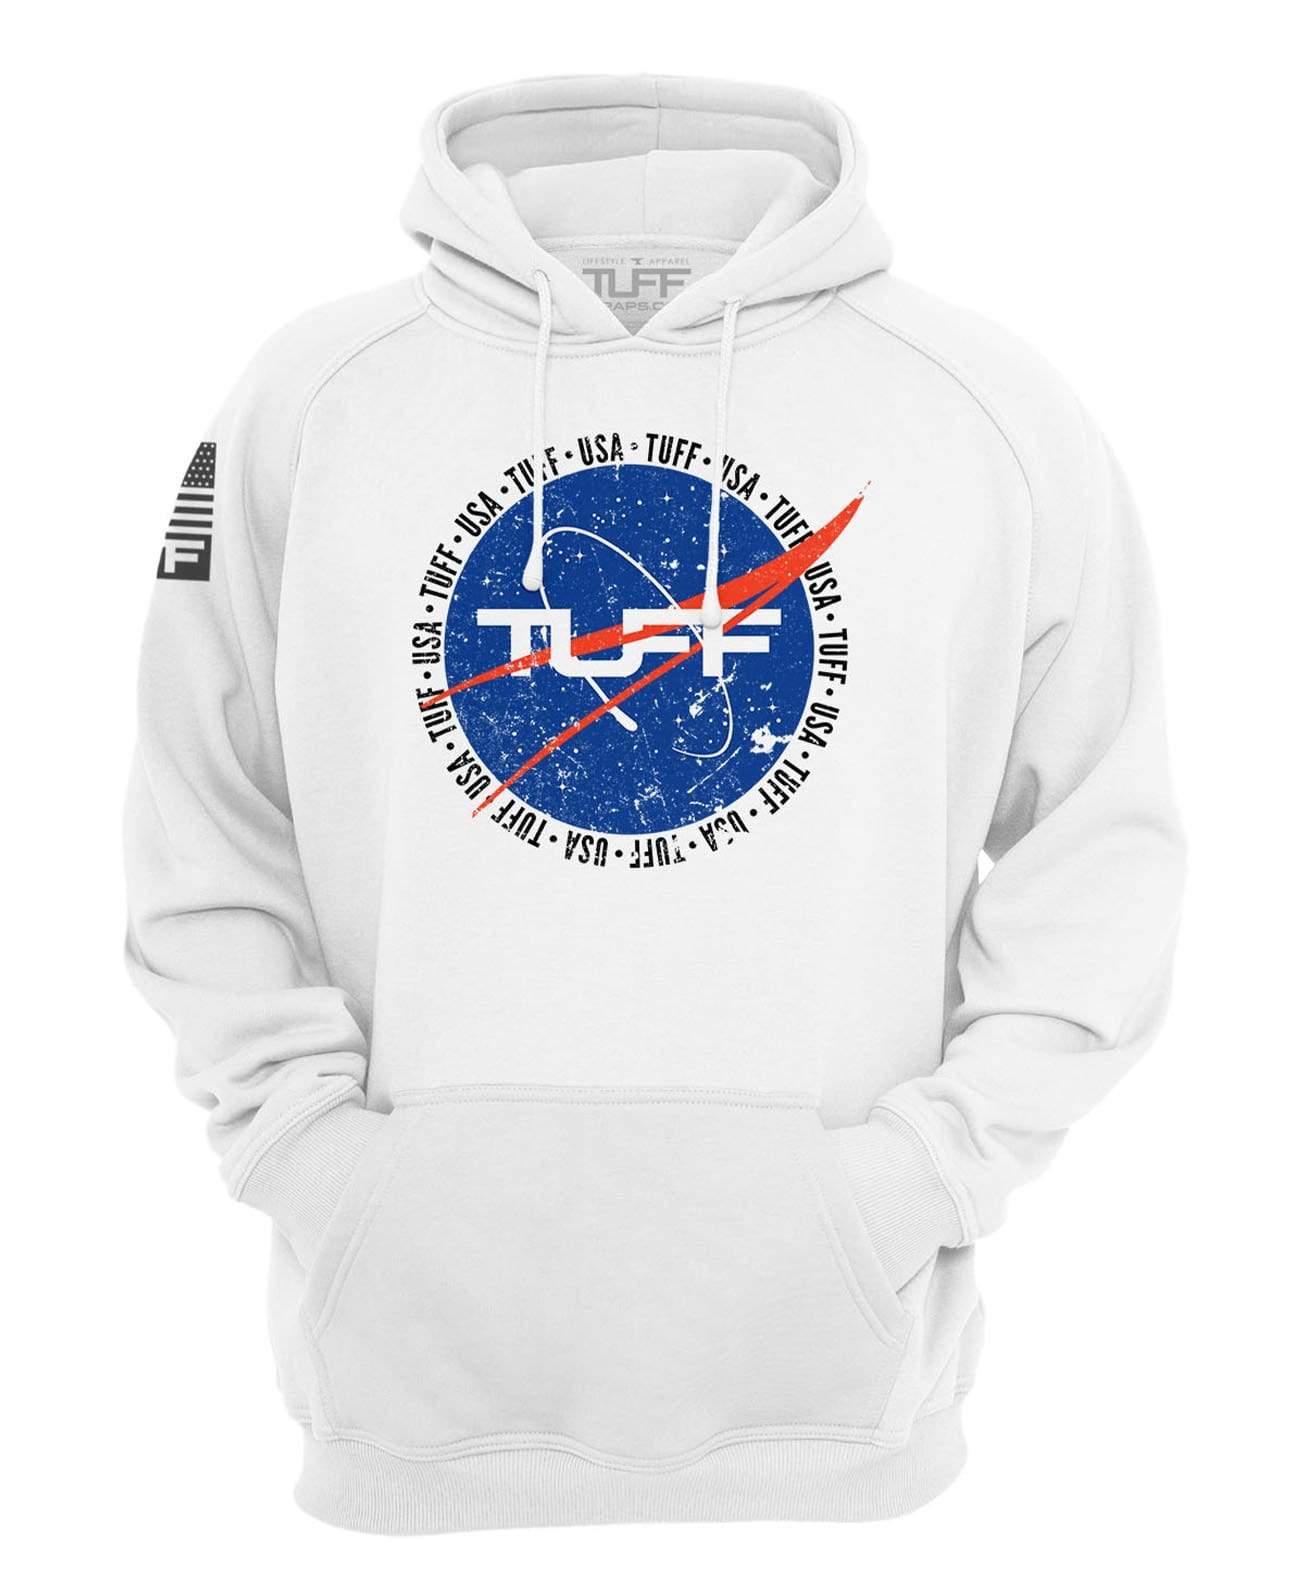 TUFF Deep Space Hooded Sweatshirt XS / White TuffWraps.com